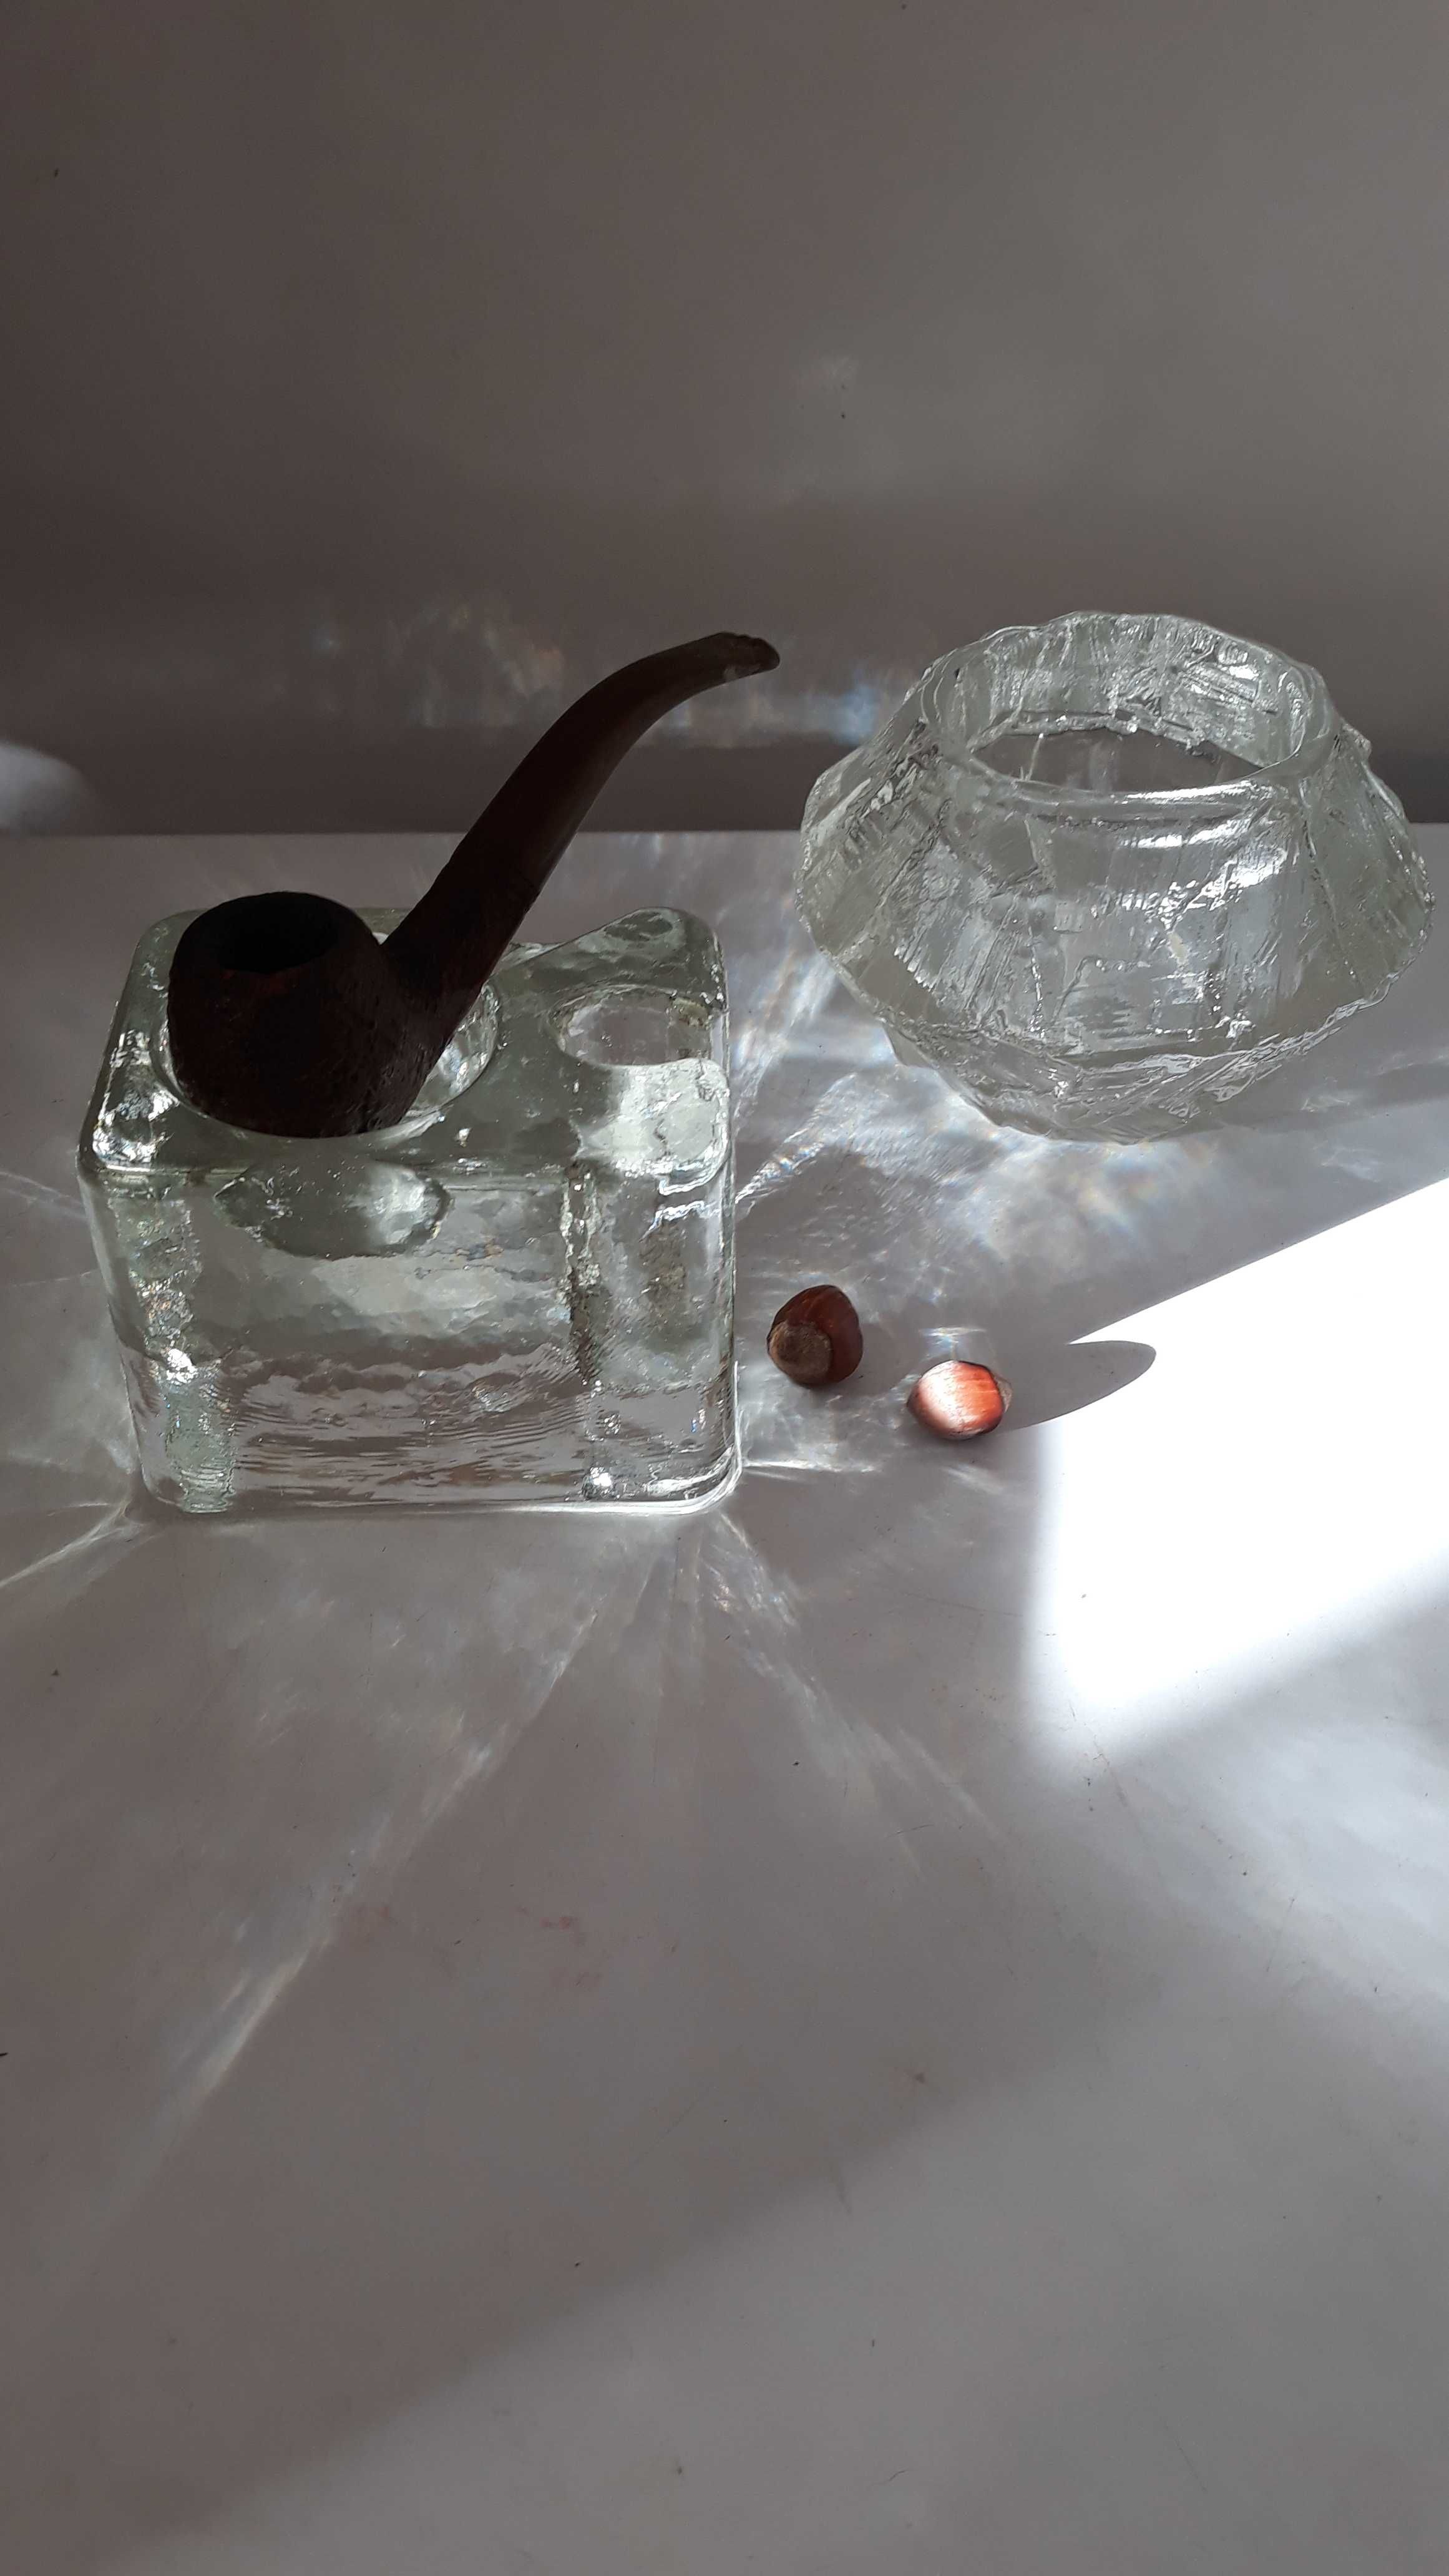 Suport pipa sticla cristal Suedia vintage mid century